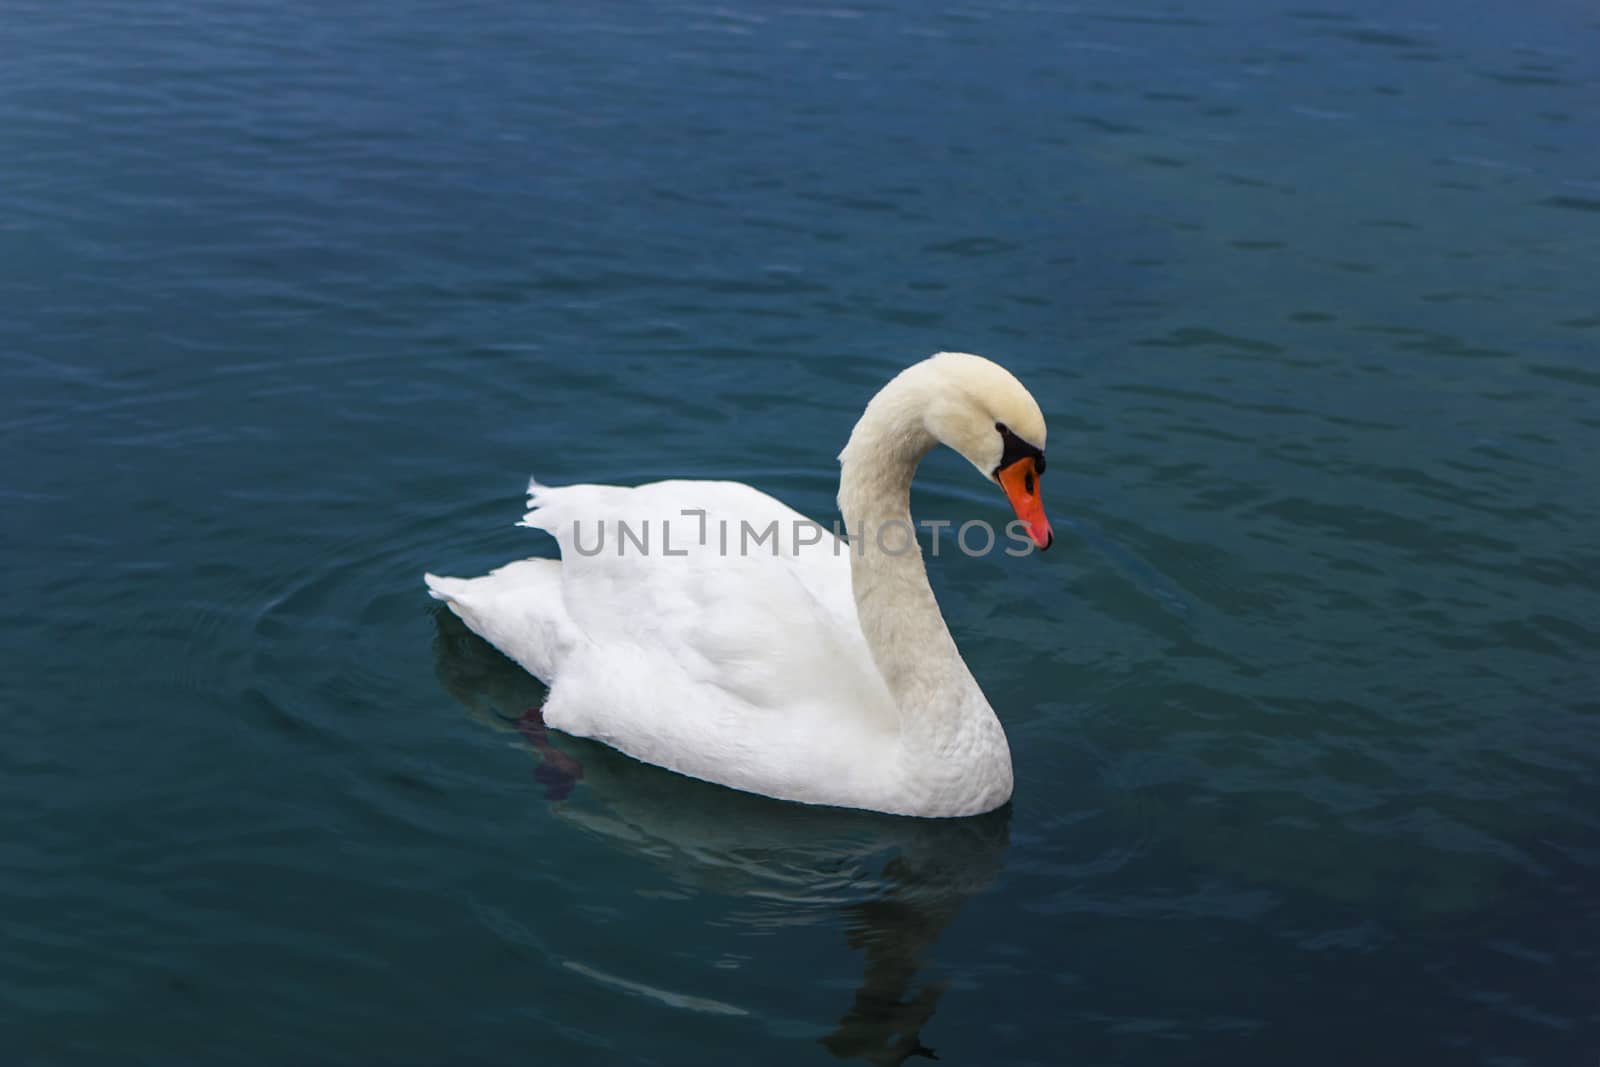 White swan in blue lake by huntz